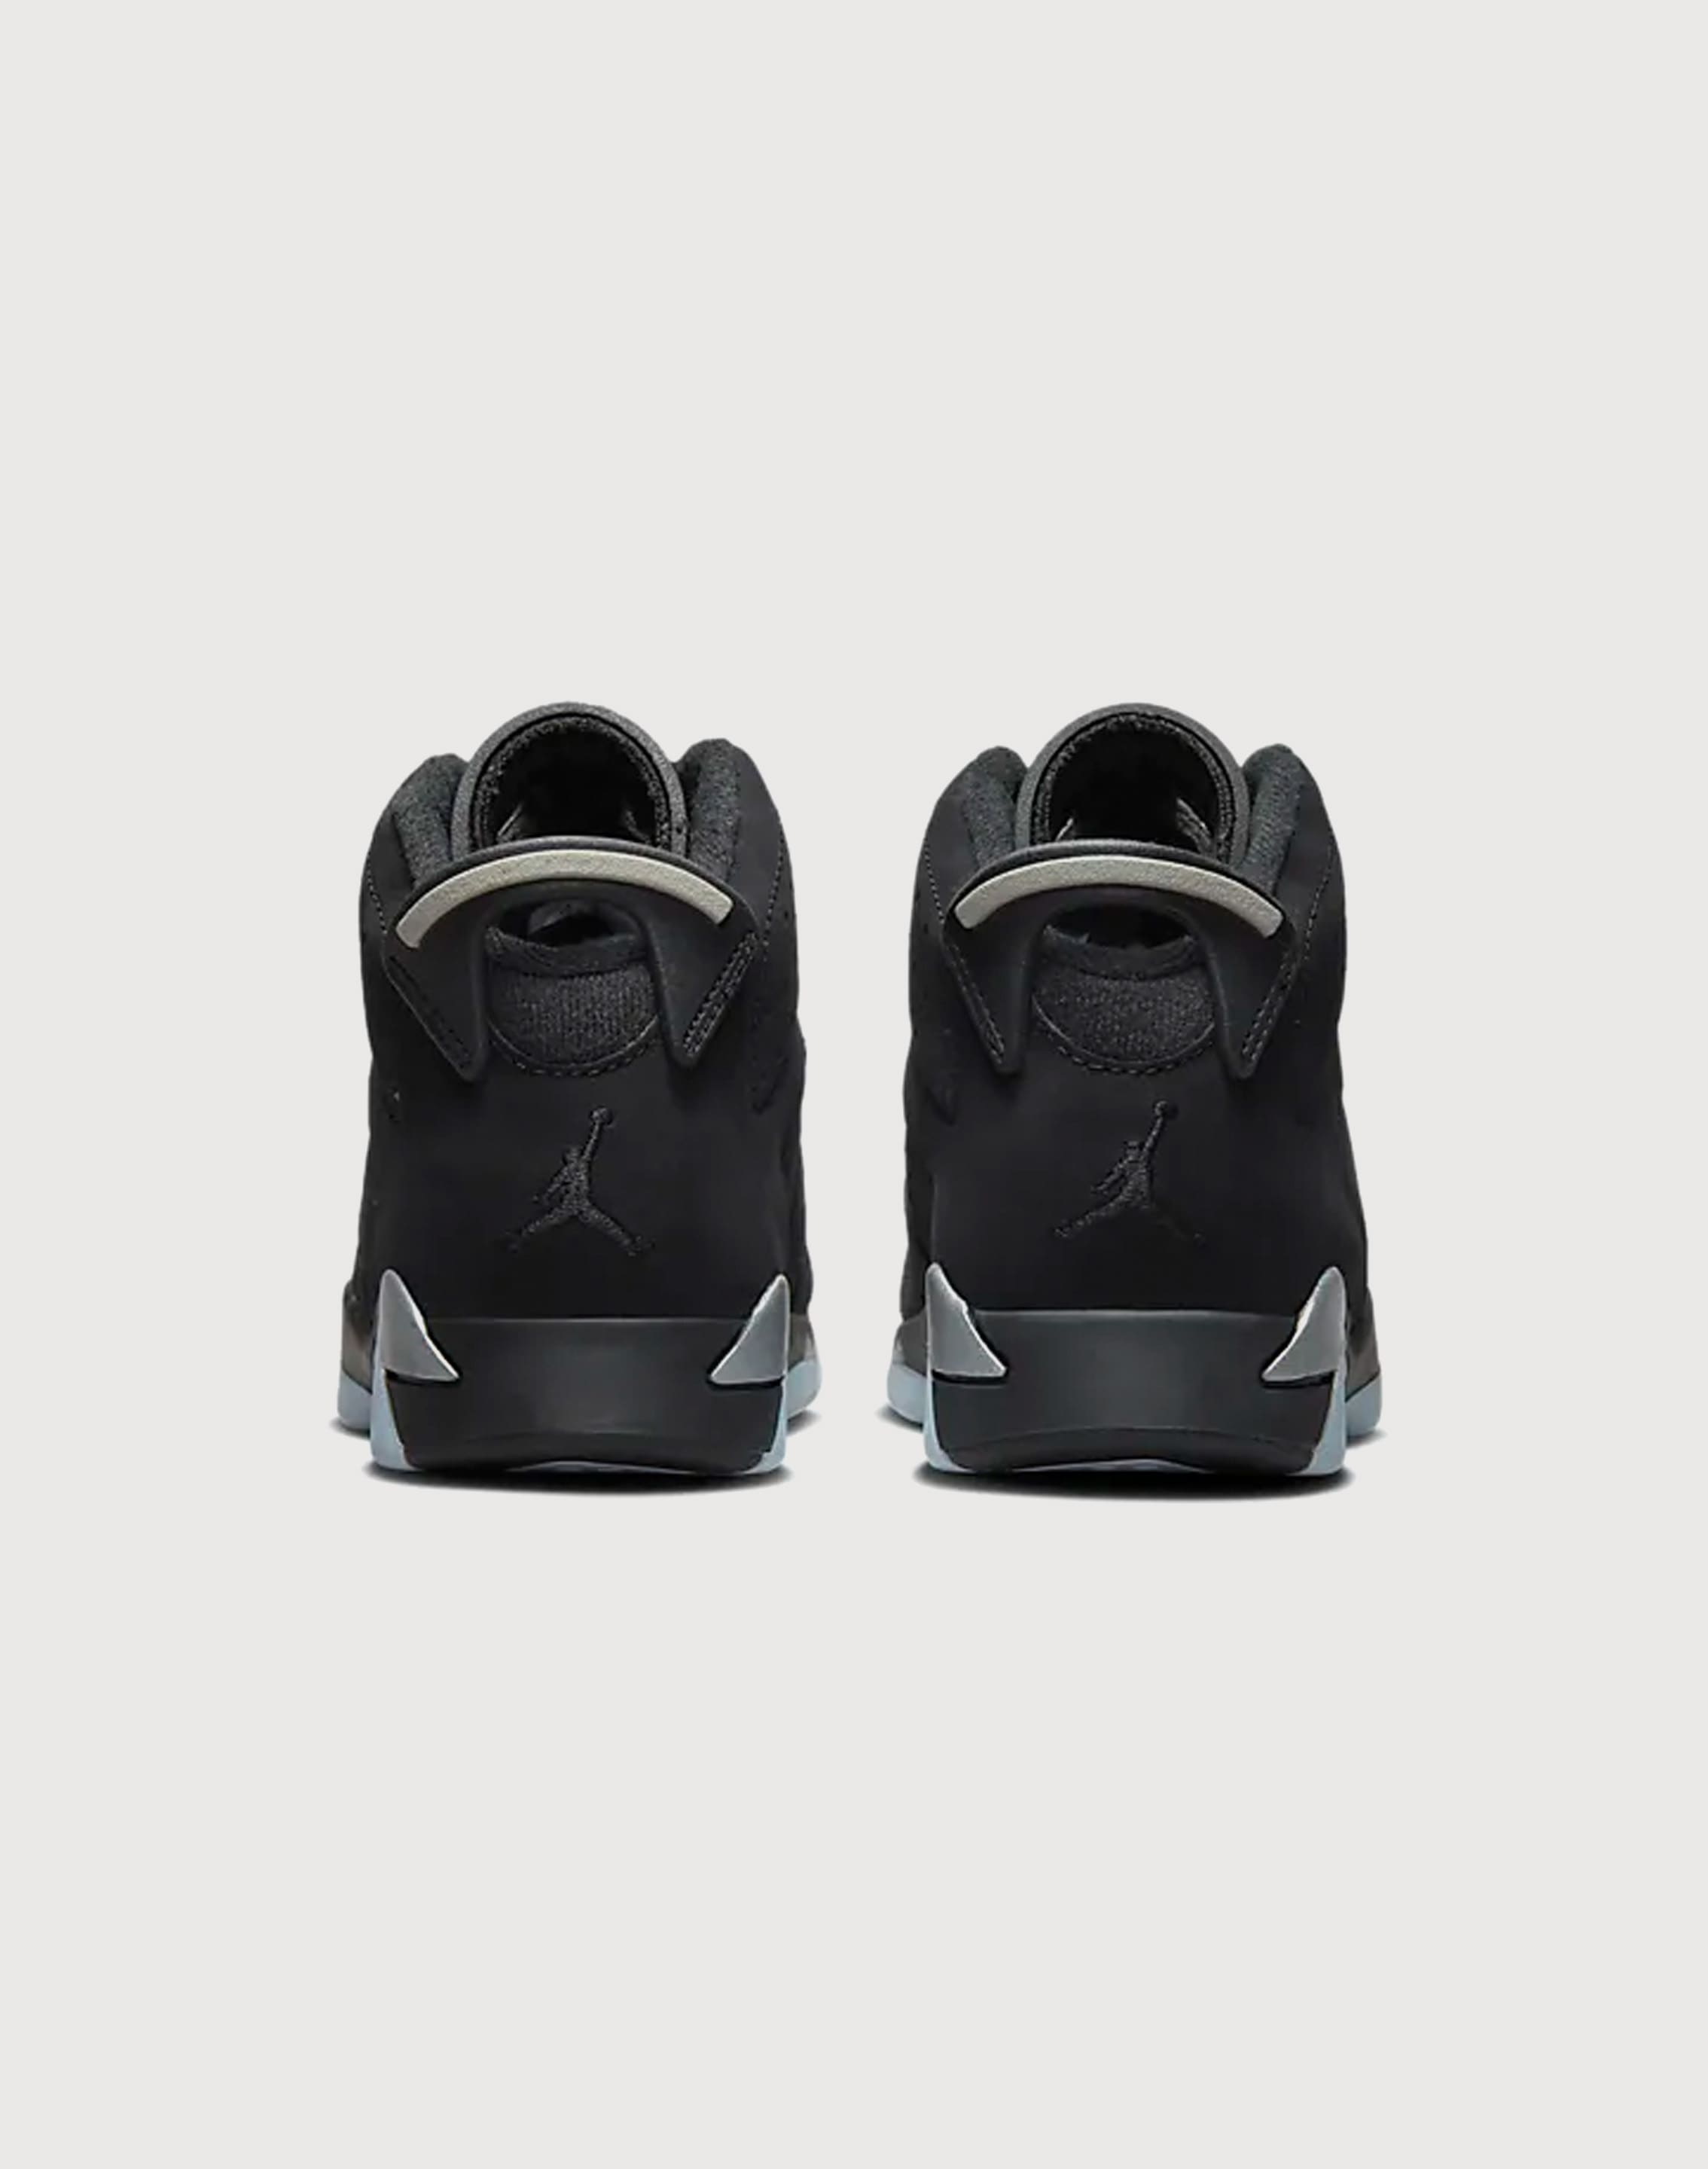 The Air Jordan 6 Gets “Chrome” Plating – DTLR